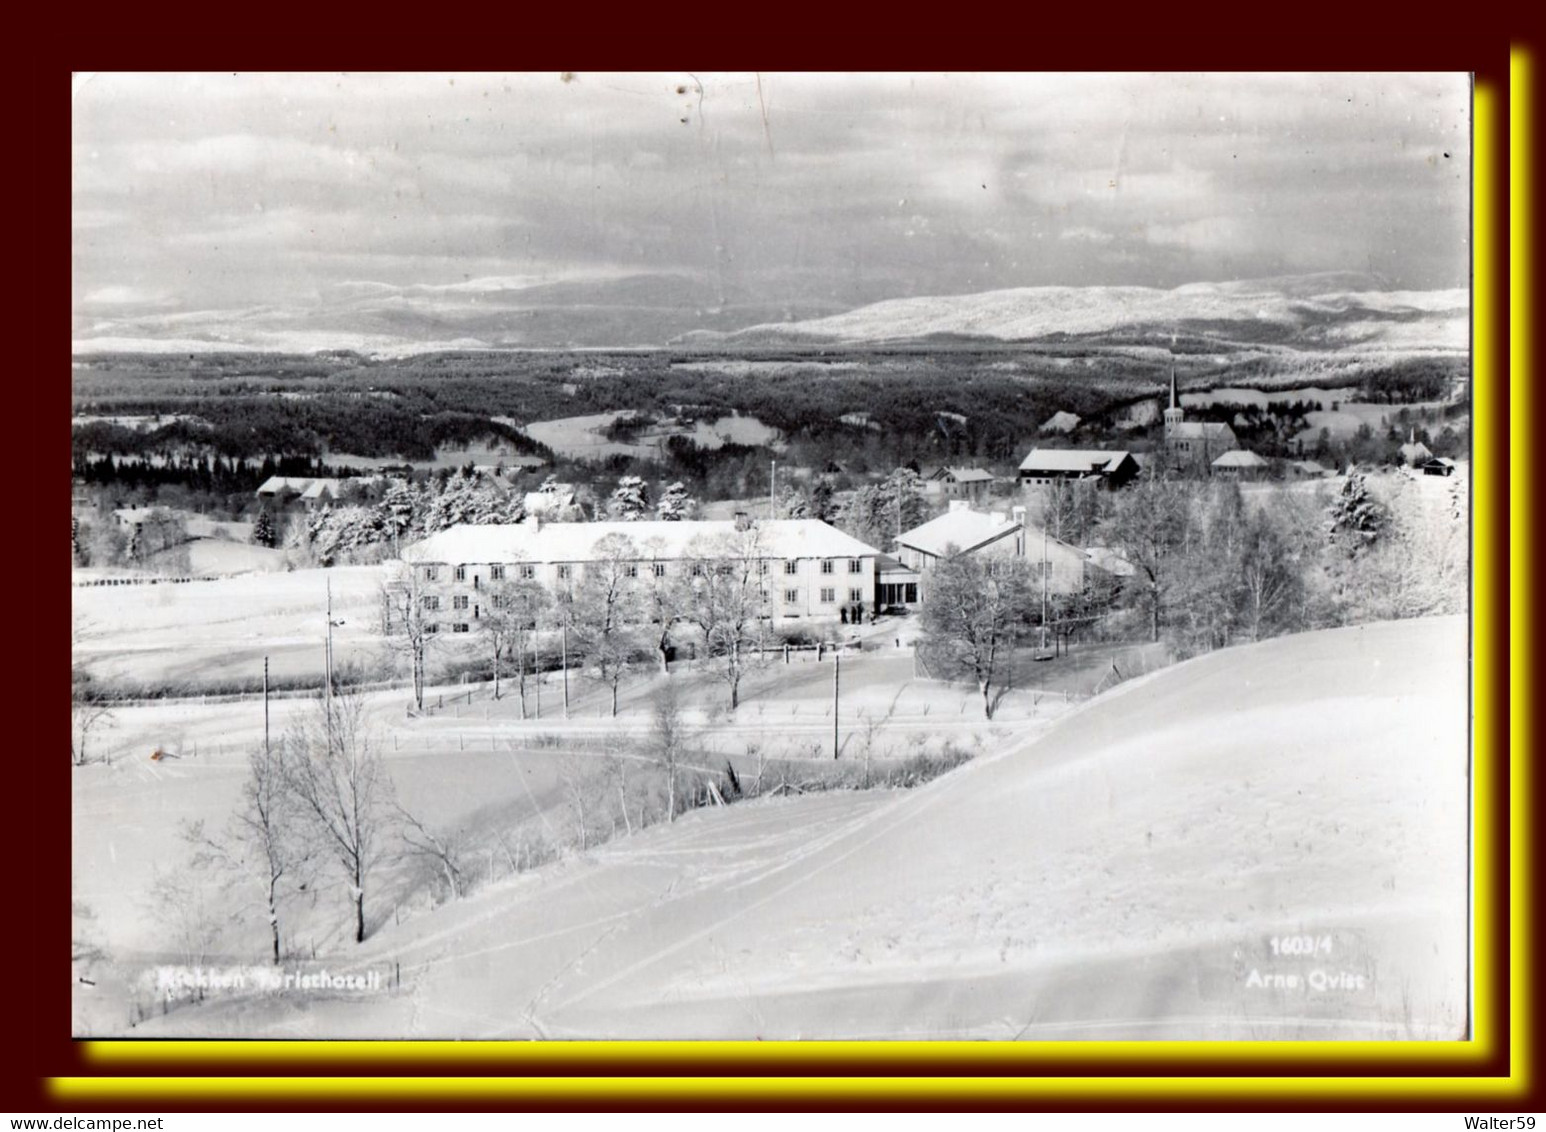 1959 Norge Norway Postcard Klekken Sent To Scotland 2scans - Lettres & Documents